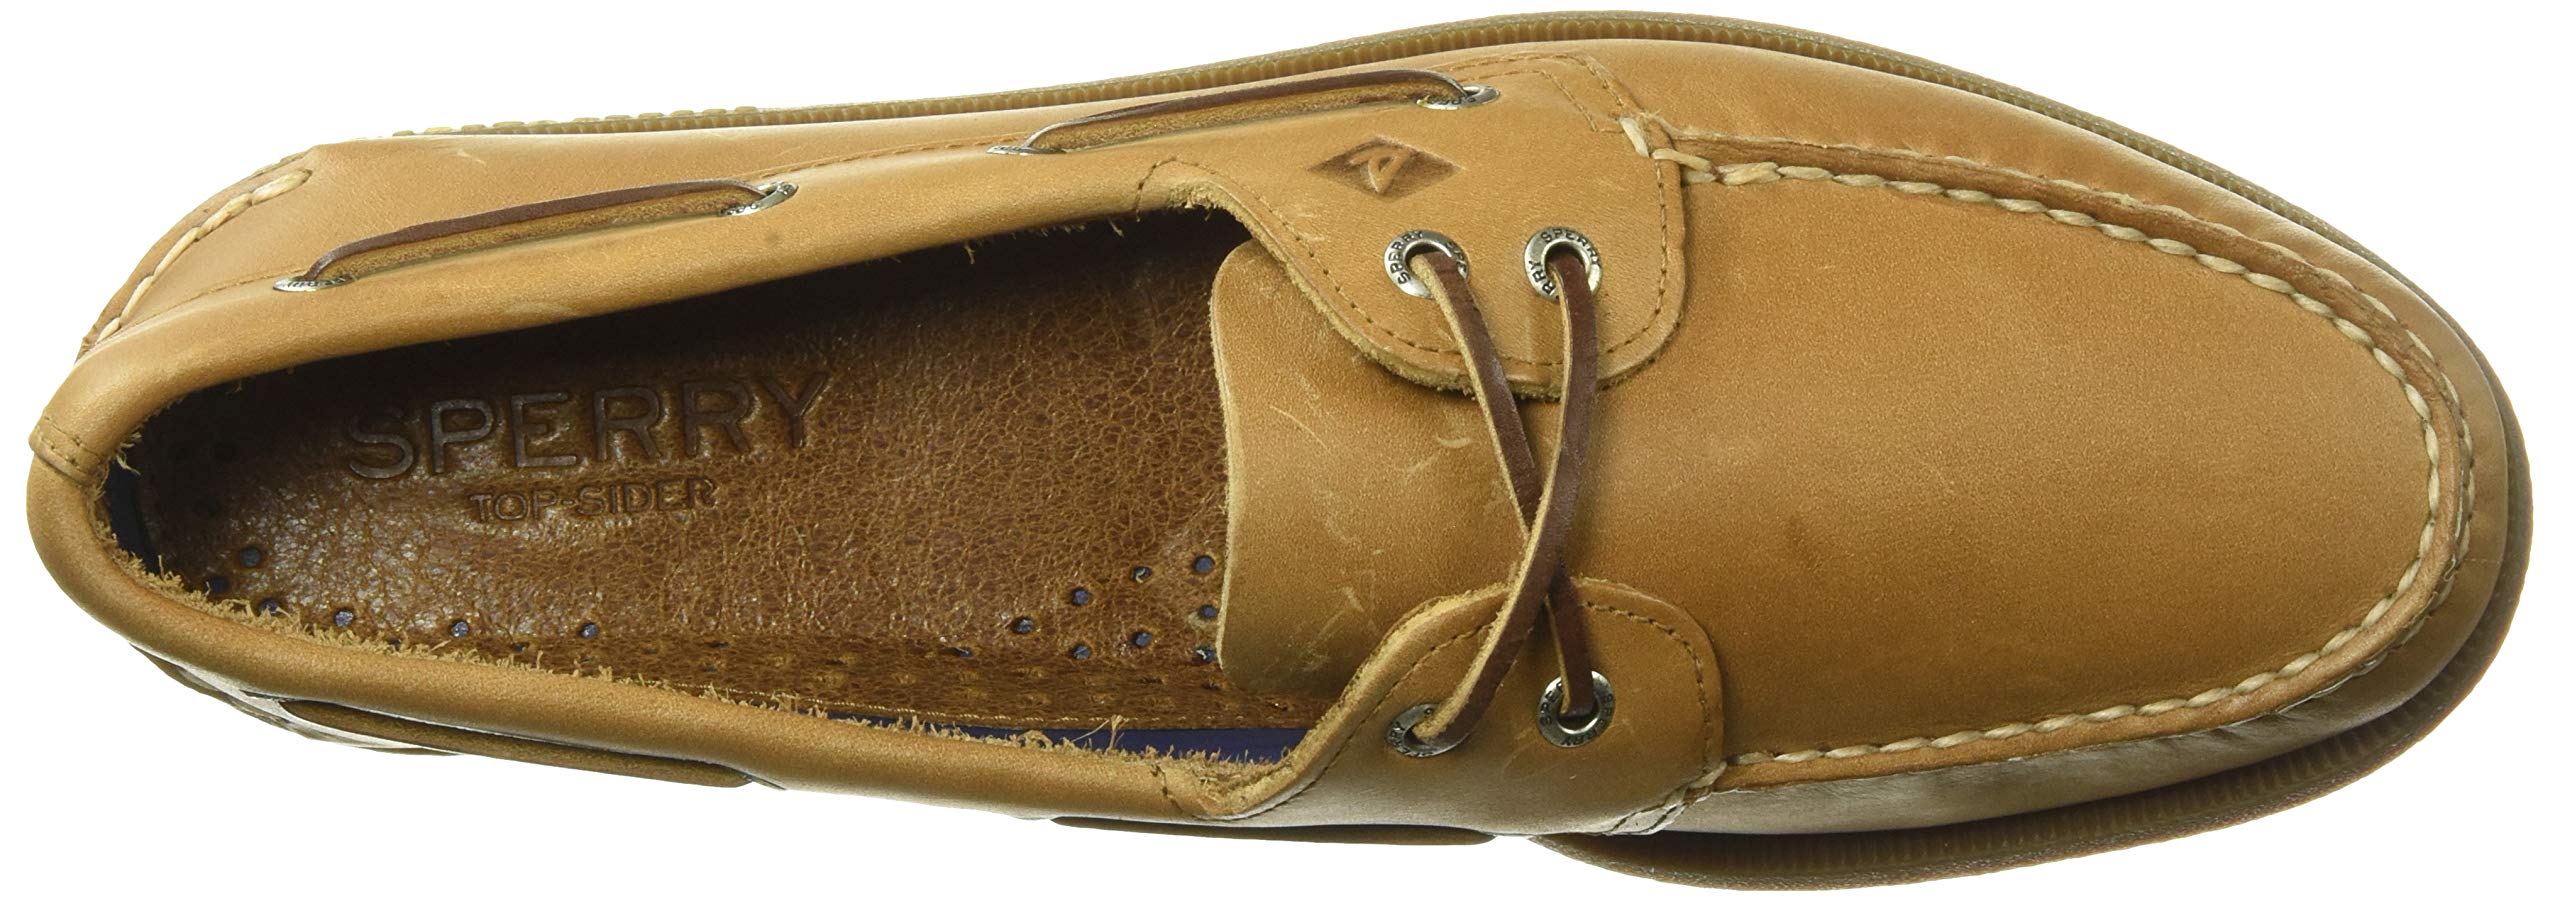 Sperry Men's Authentic Original Boat Shoe